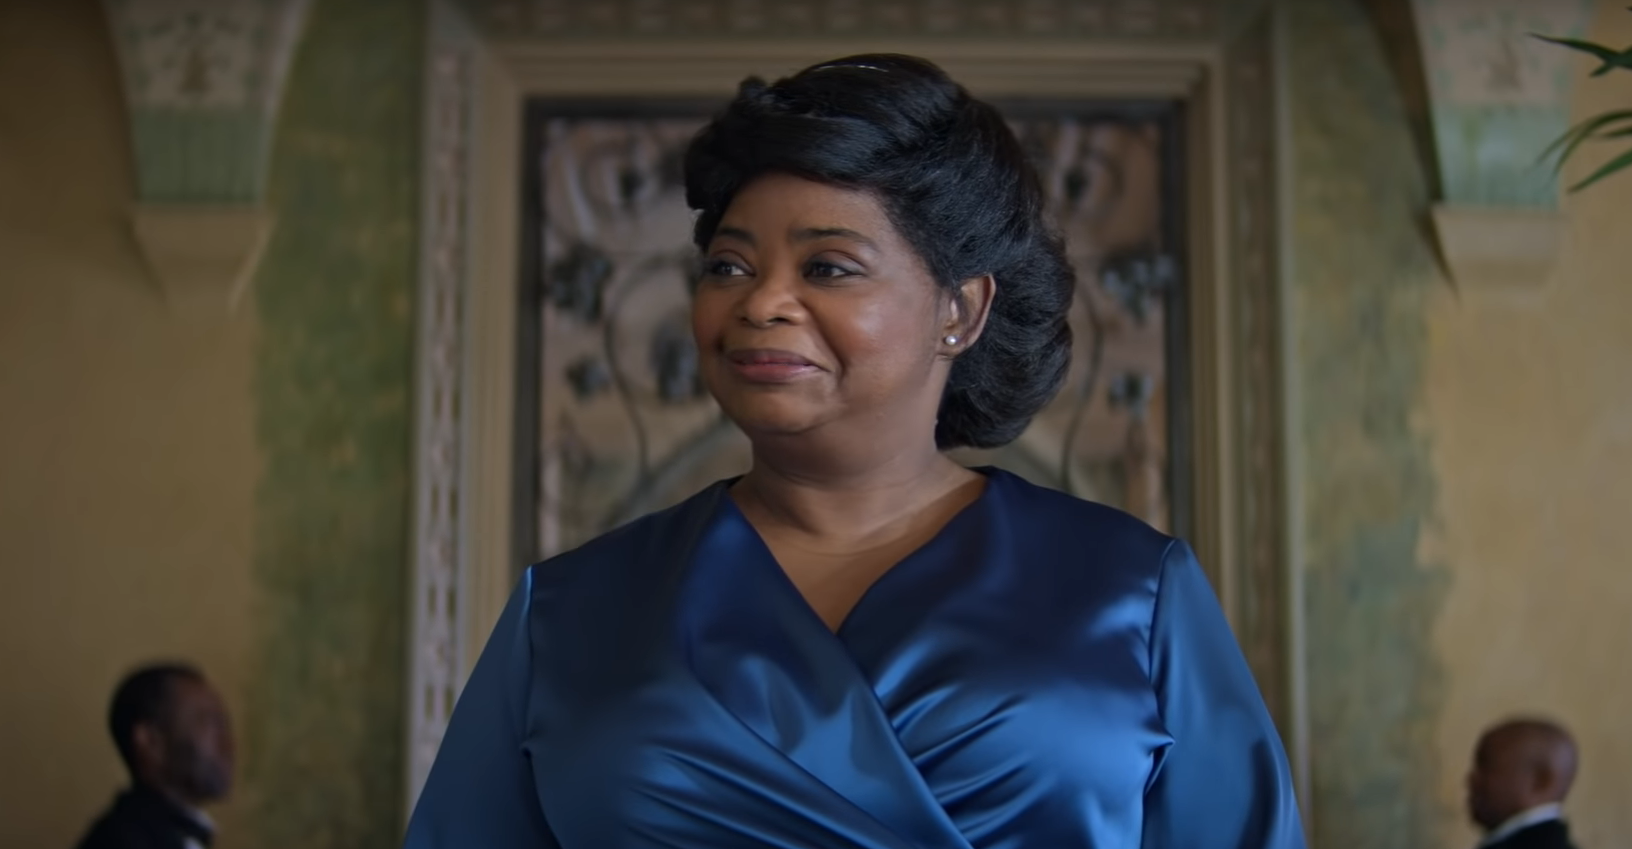 Trailer Watch: Octavia Spencer Is Madam C.J. Walker in “Self Made”